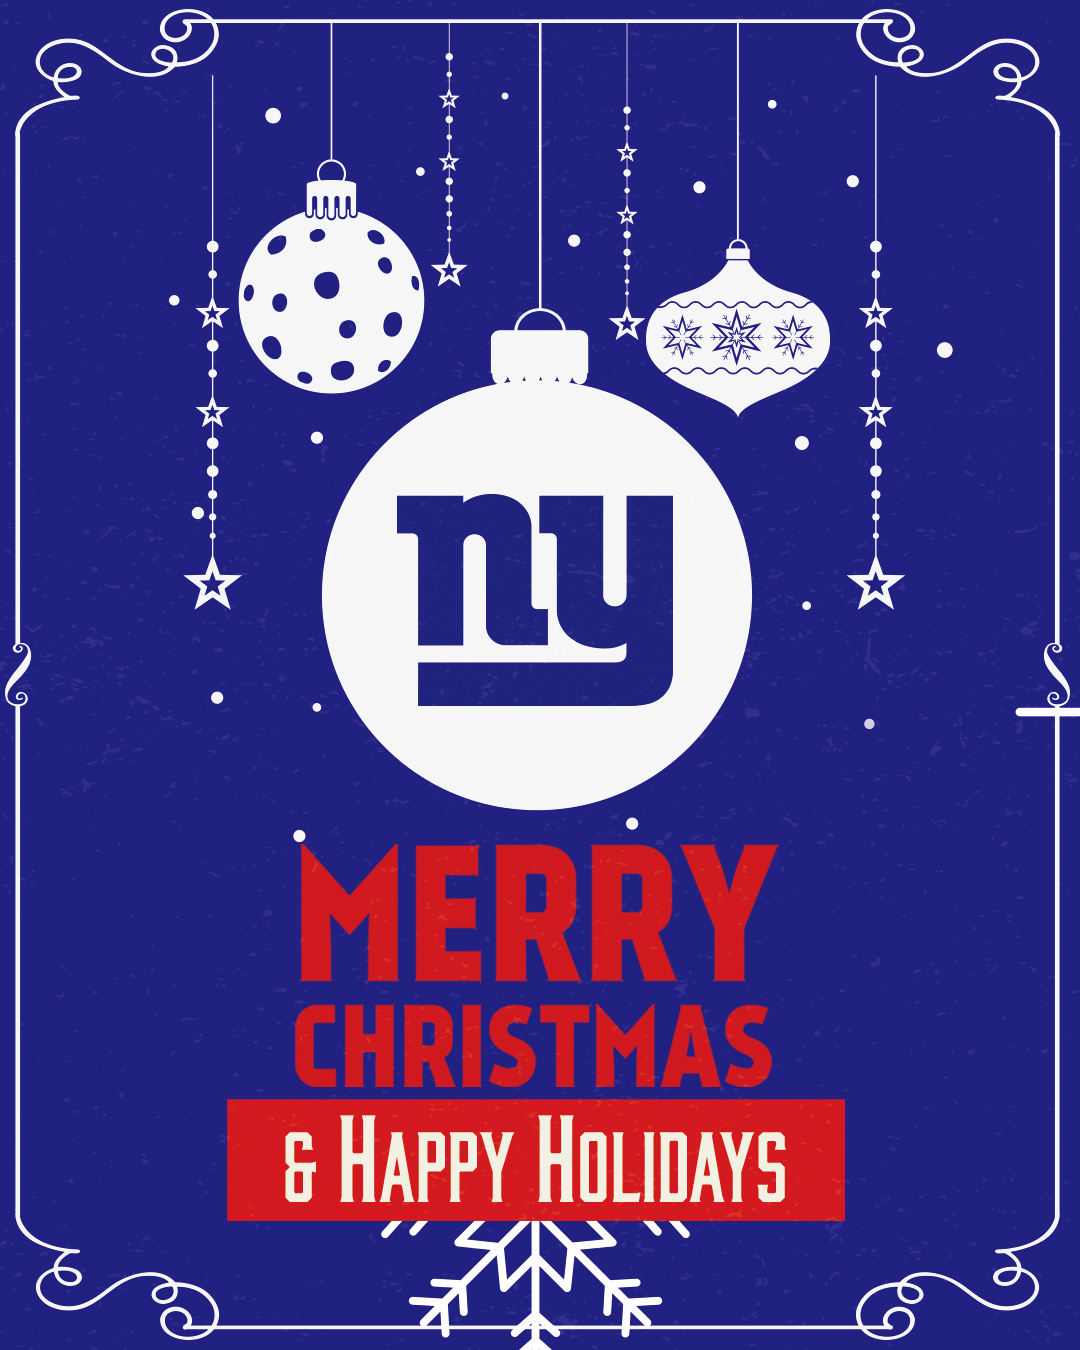 New York Giants on X: 'Wishing you a Merry Christmas & Happy Holidays!  